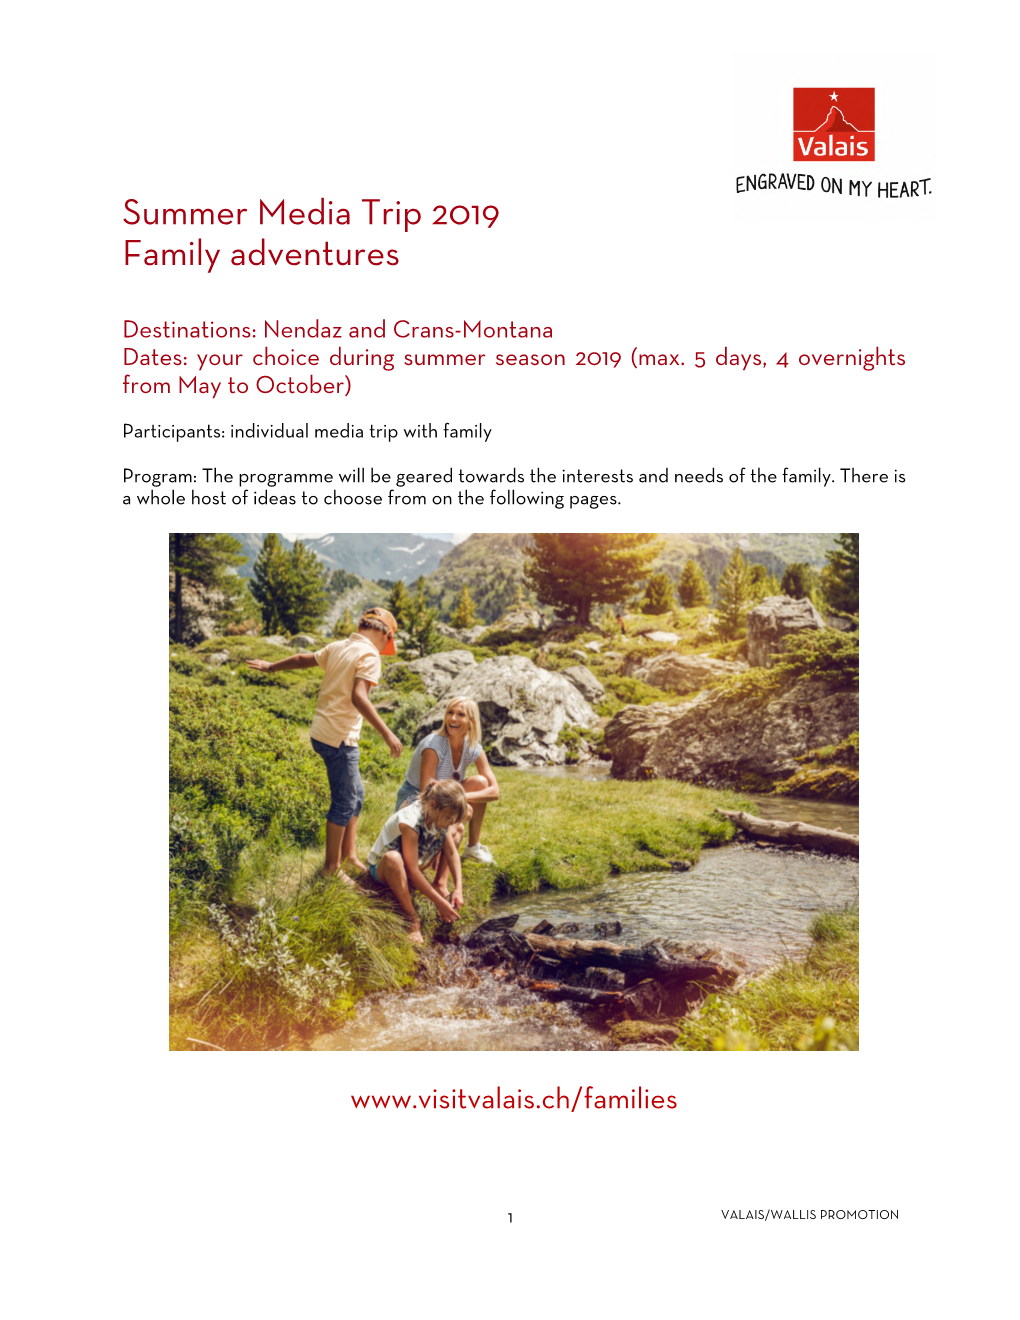 Summer Media Trip 2019 Family Adventures